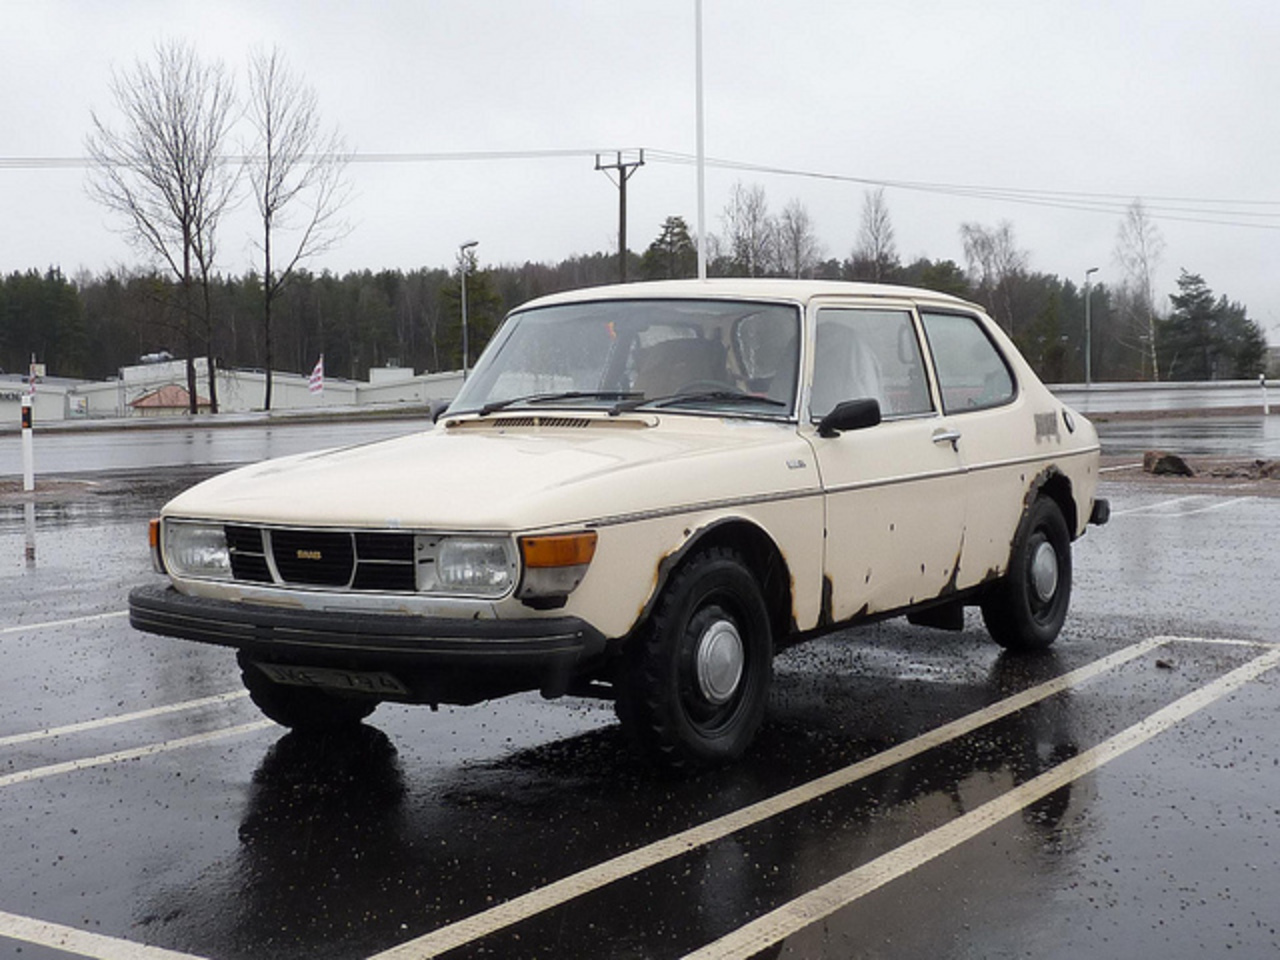 Swedish cars - a set on Flickr